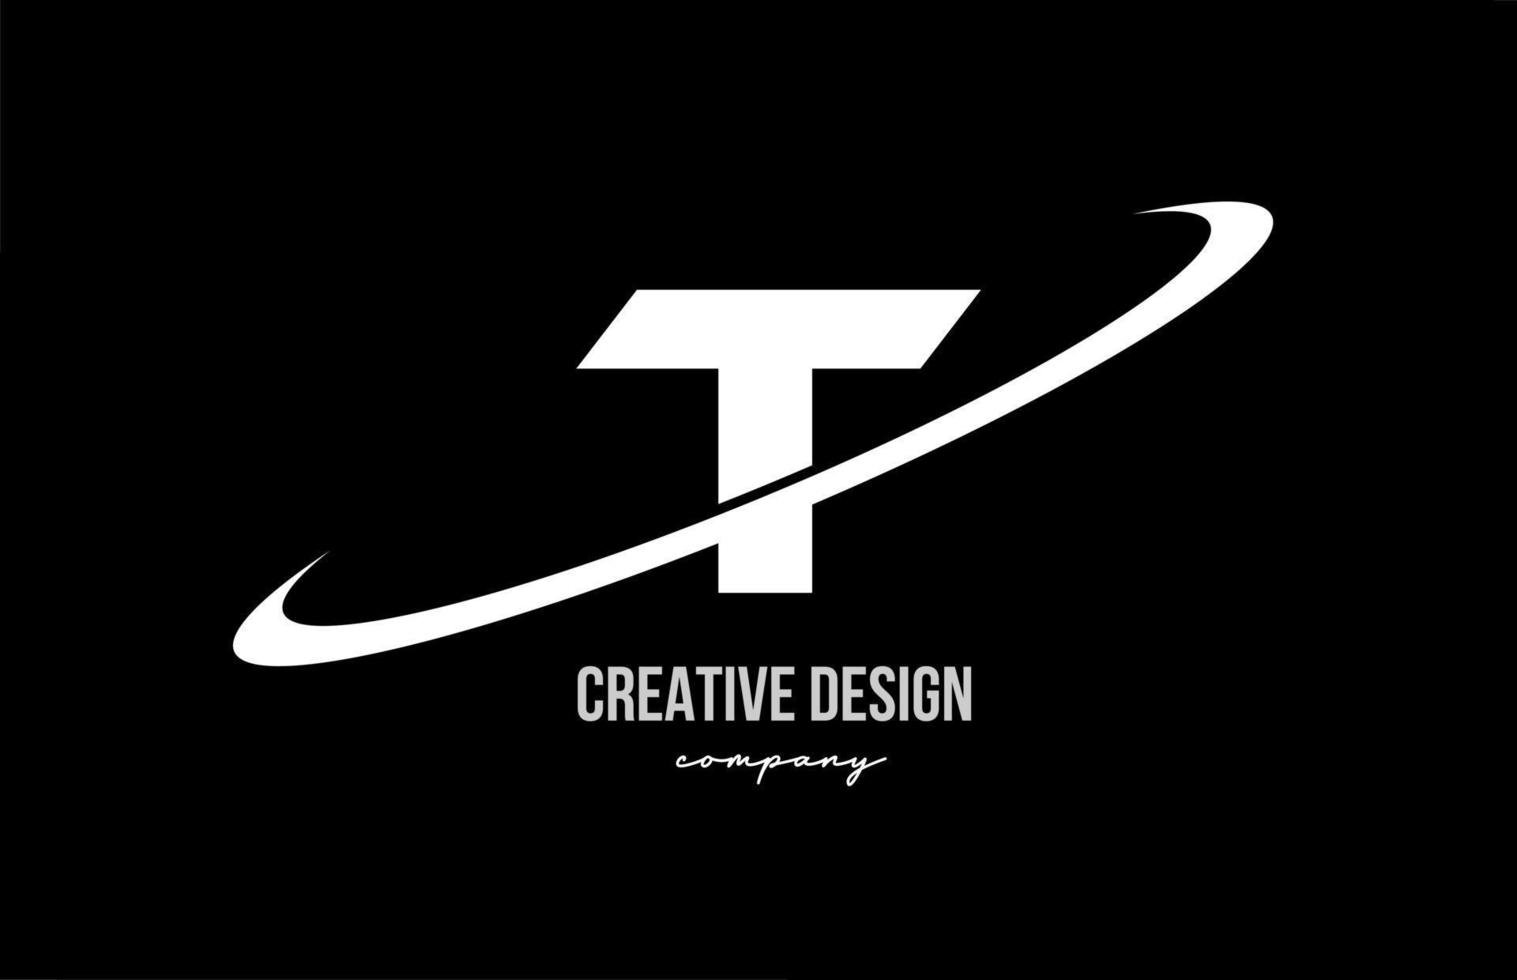 negro blanco t alfabeto letra logo con grande silbido. corporativo creativo modelo diseño para empresa y negocio vector